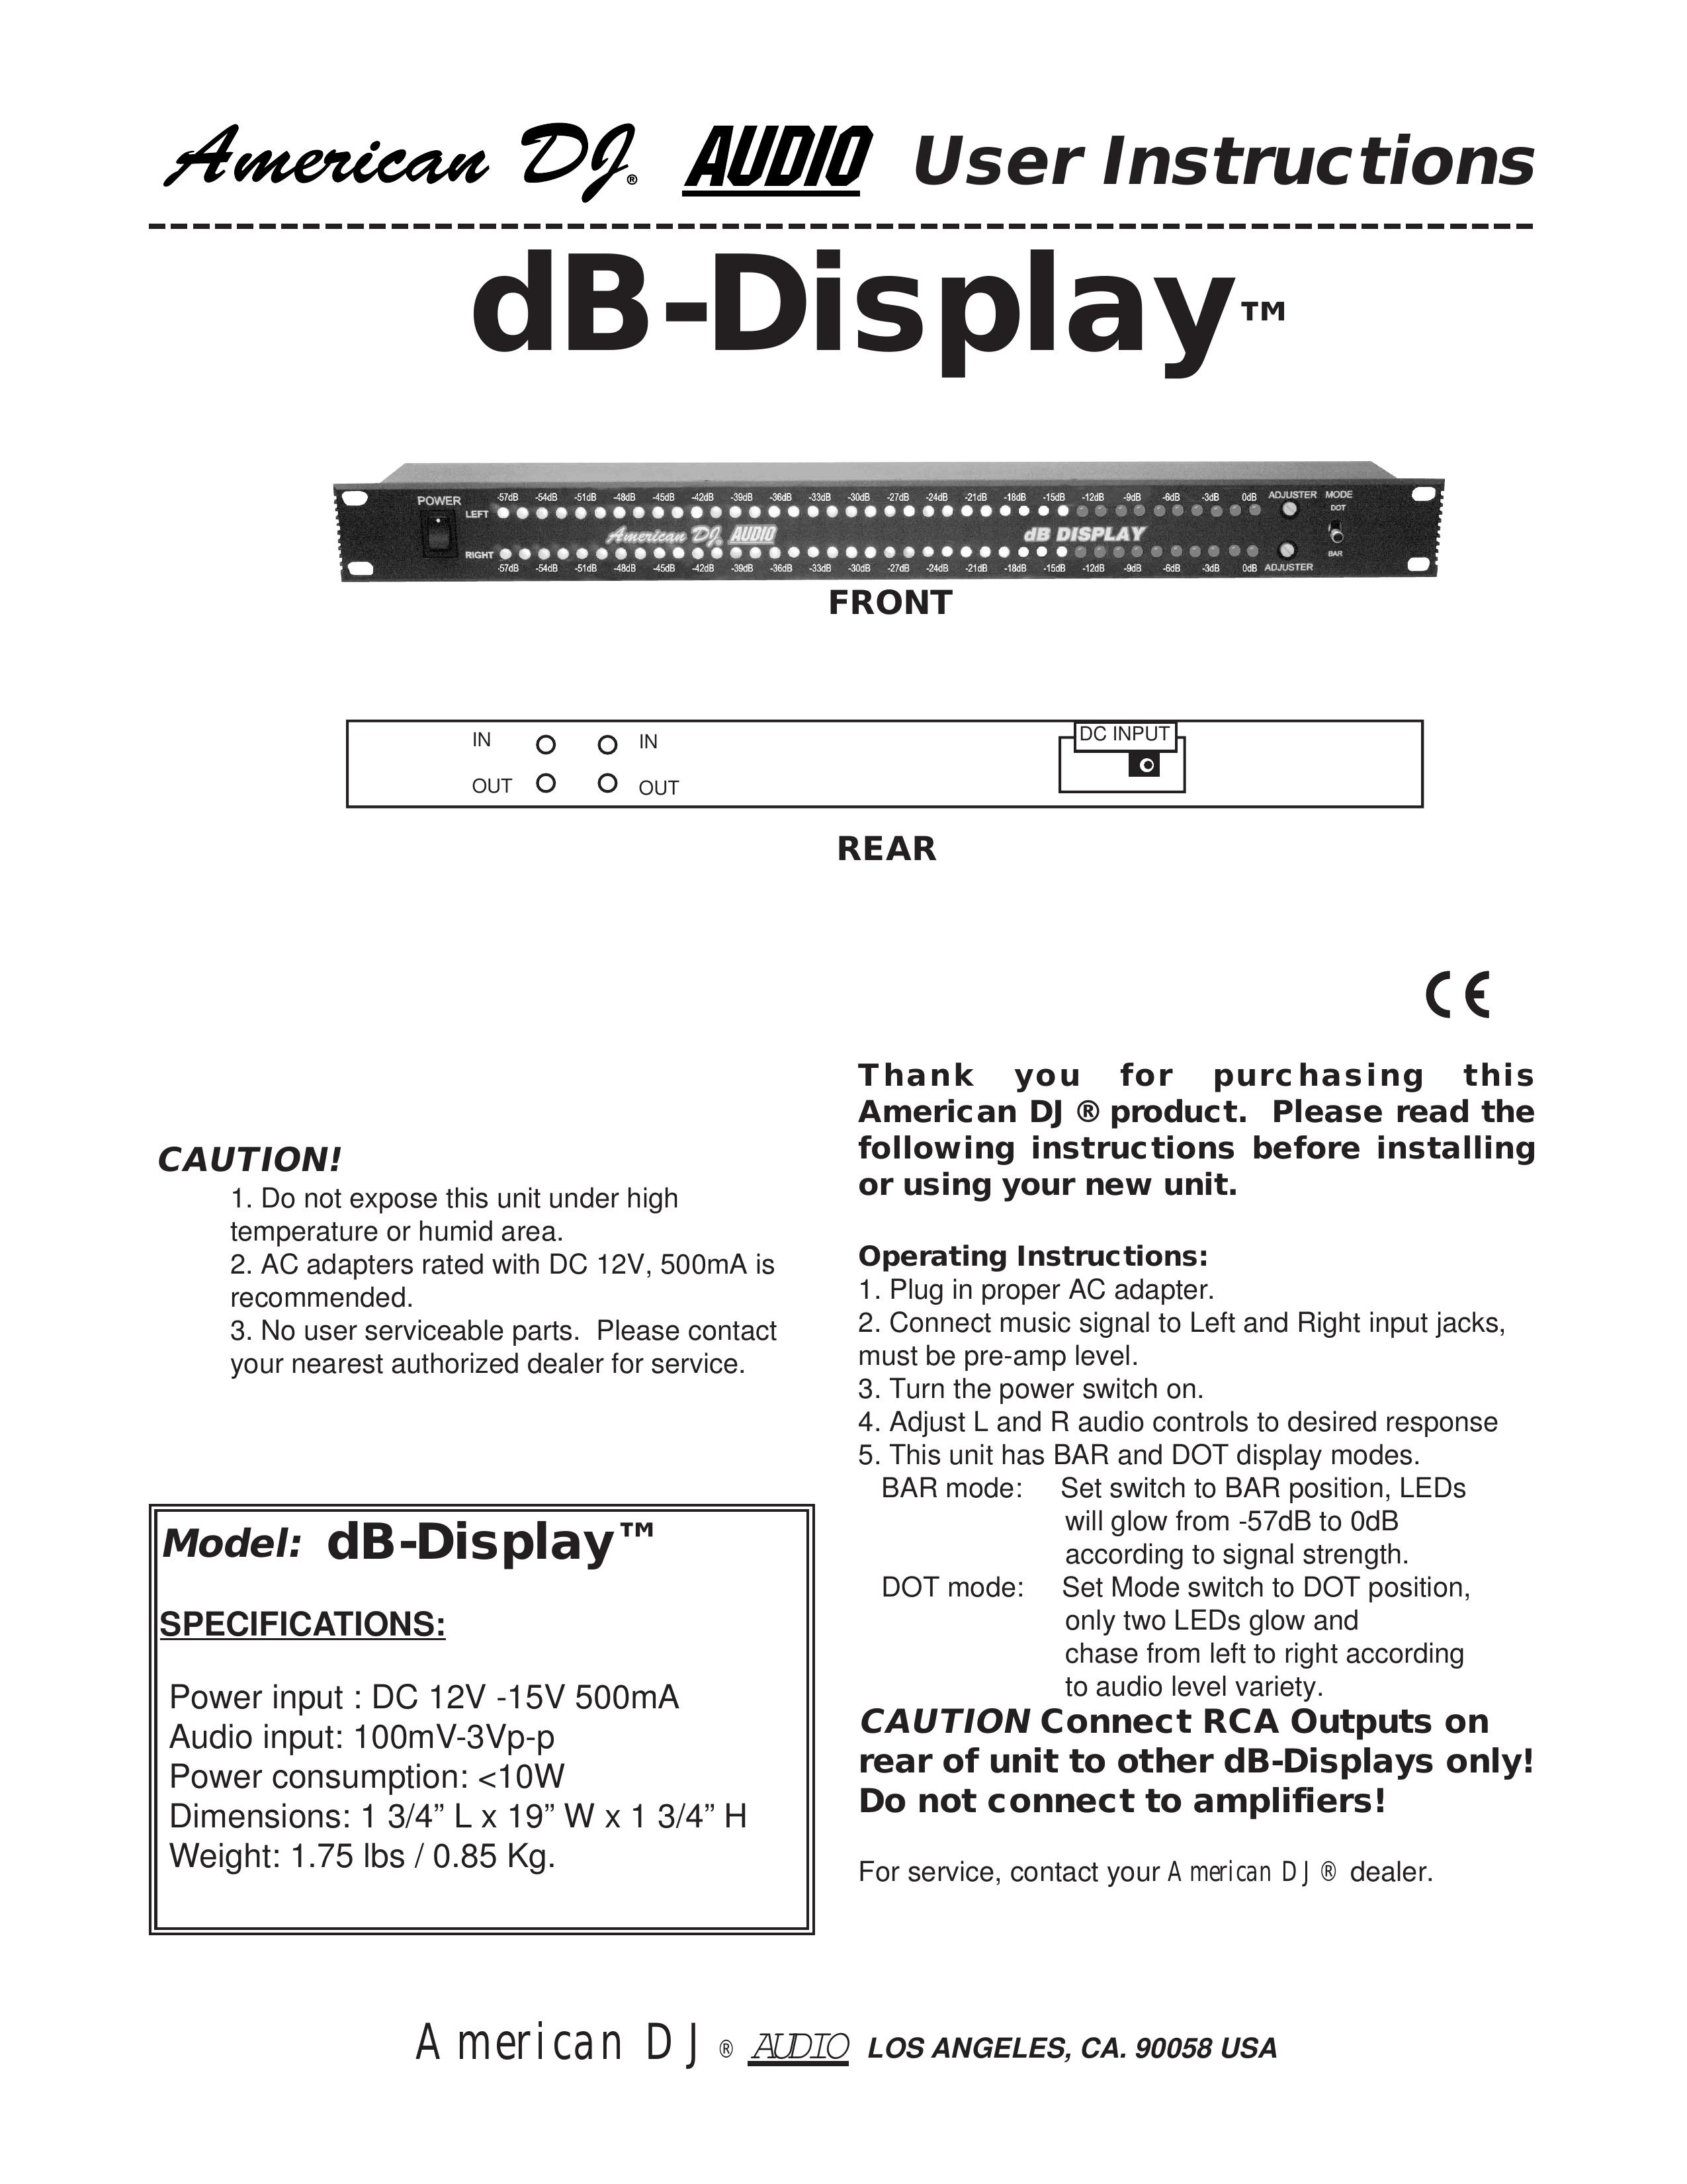 American DJ dB-Display DJ Equipment User Manual (Page 1)